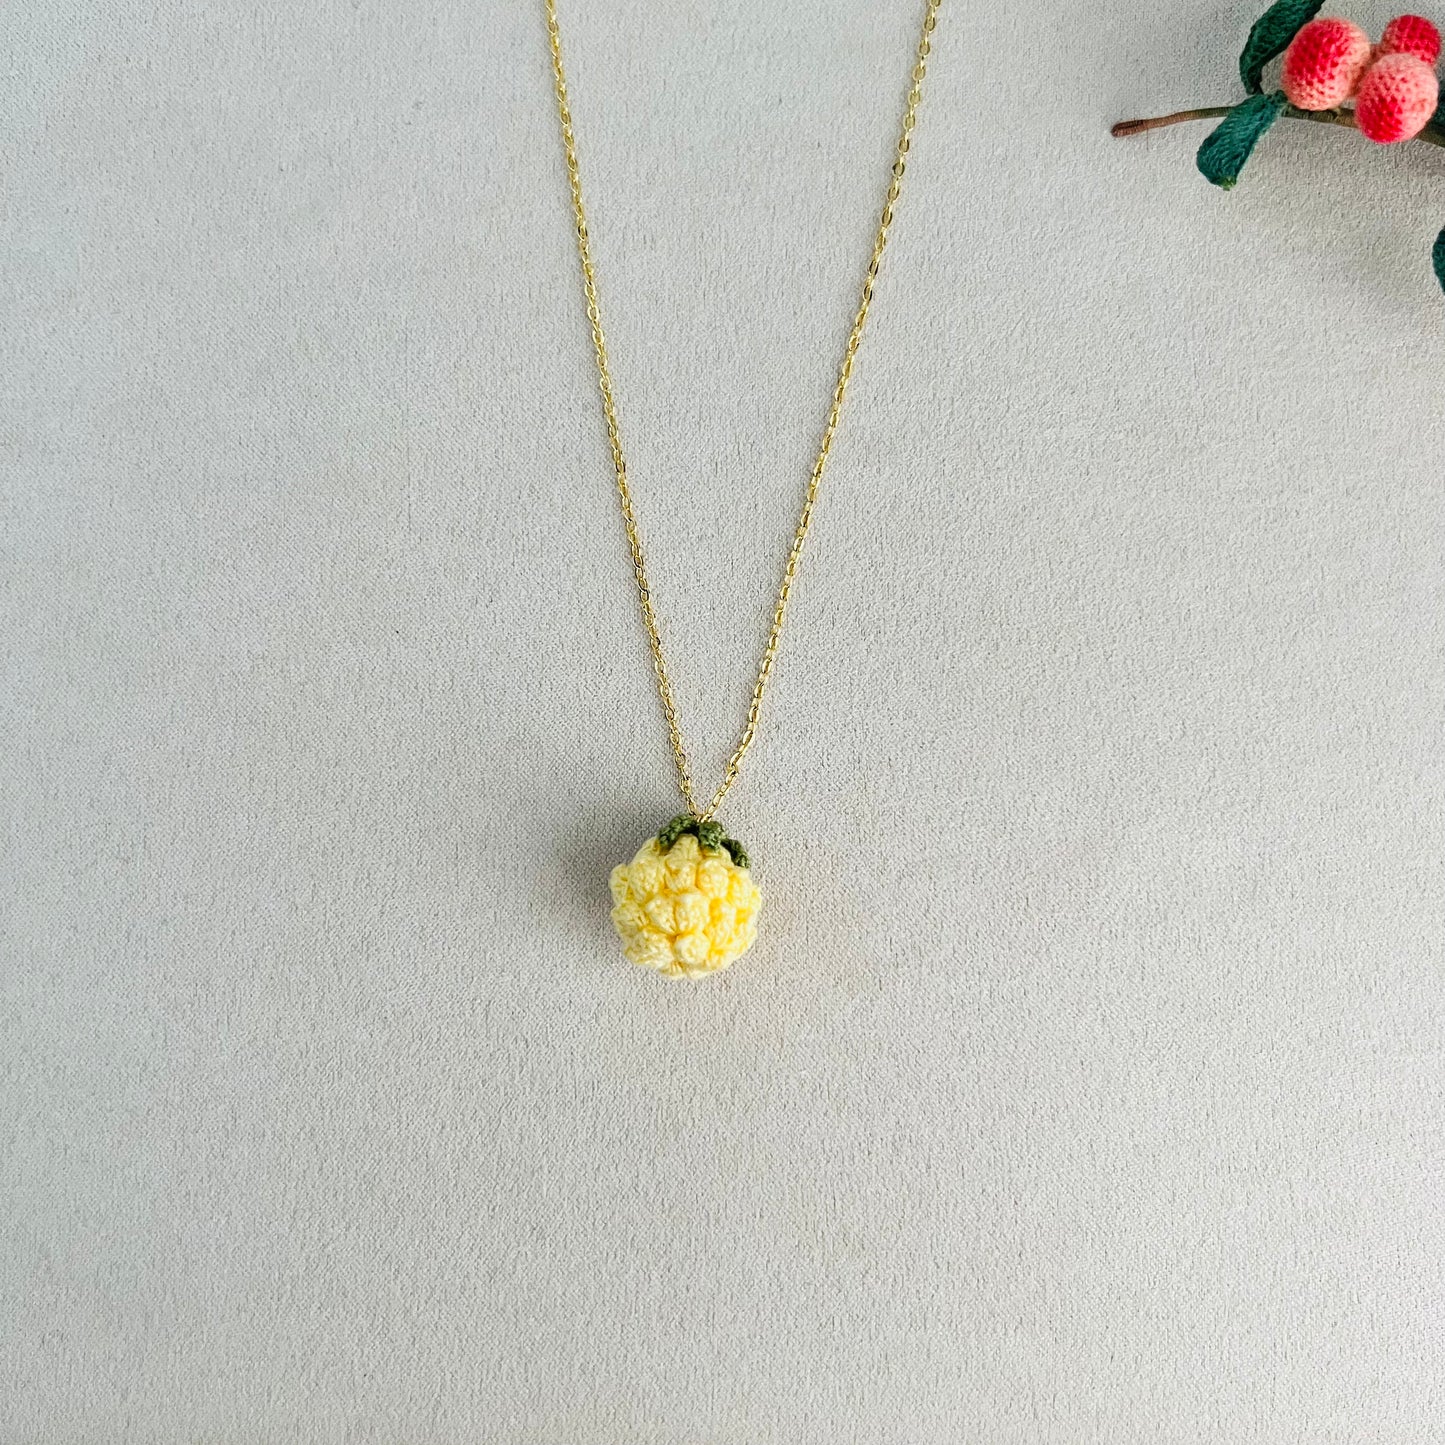 Pineapple Necklace | Handmade Fruit Jewelry | Crochet Pineapple Necklace